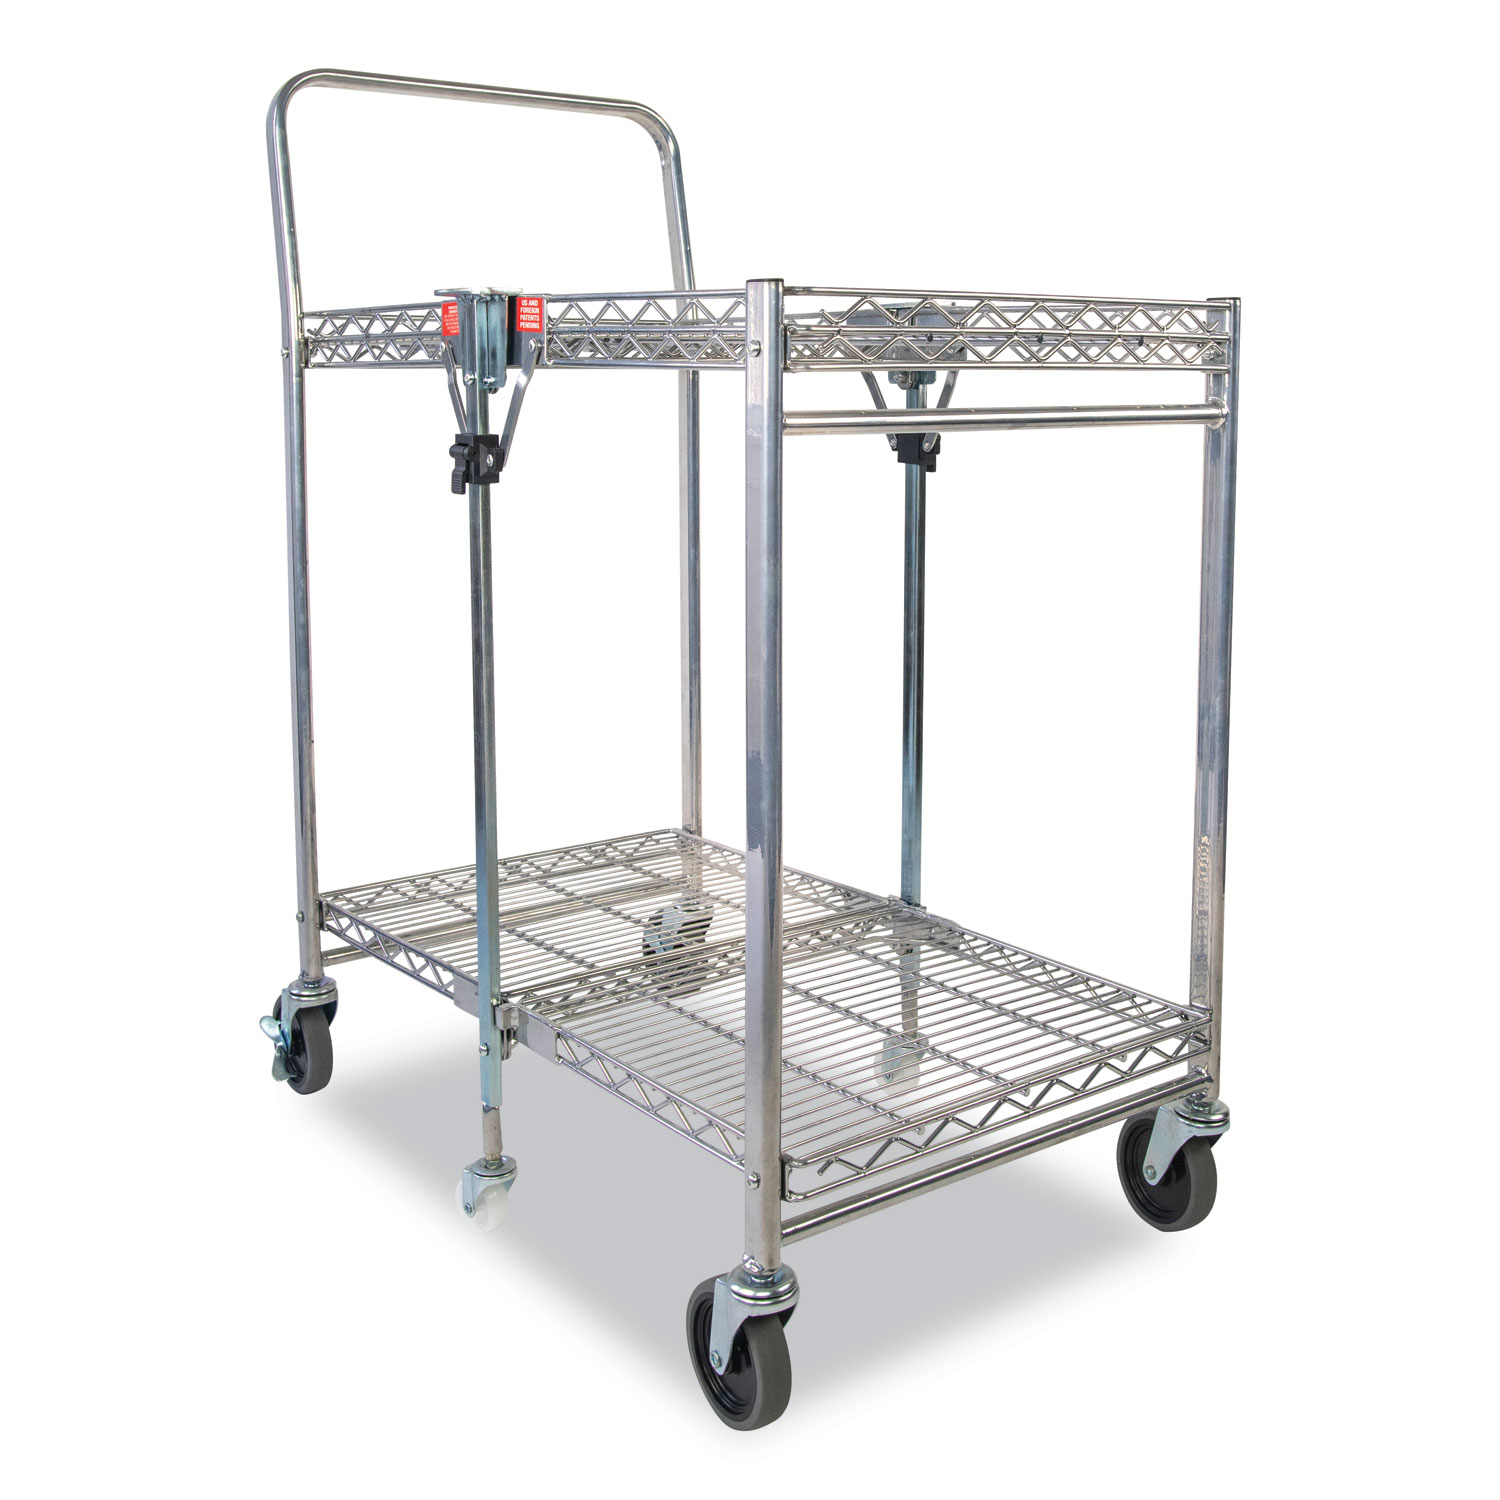 Image of Stowaway Folding Carts, 2 Shelves, 29.63w x 37.25d x 18h, Chrome, 250 lb Capacity